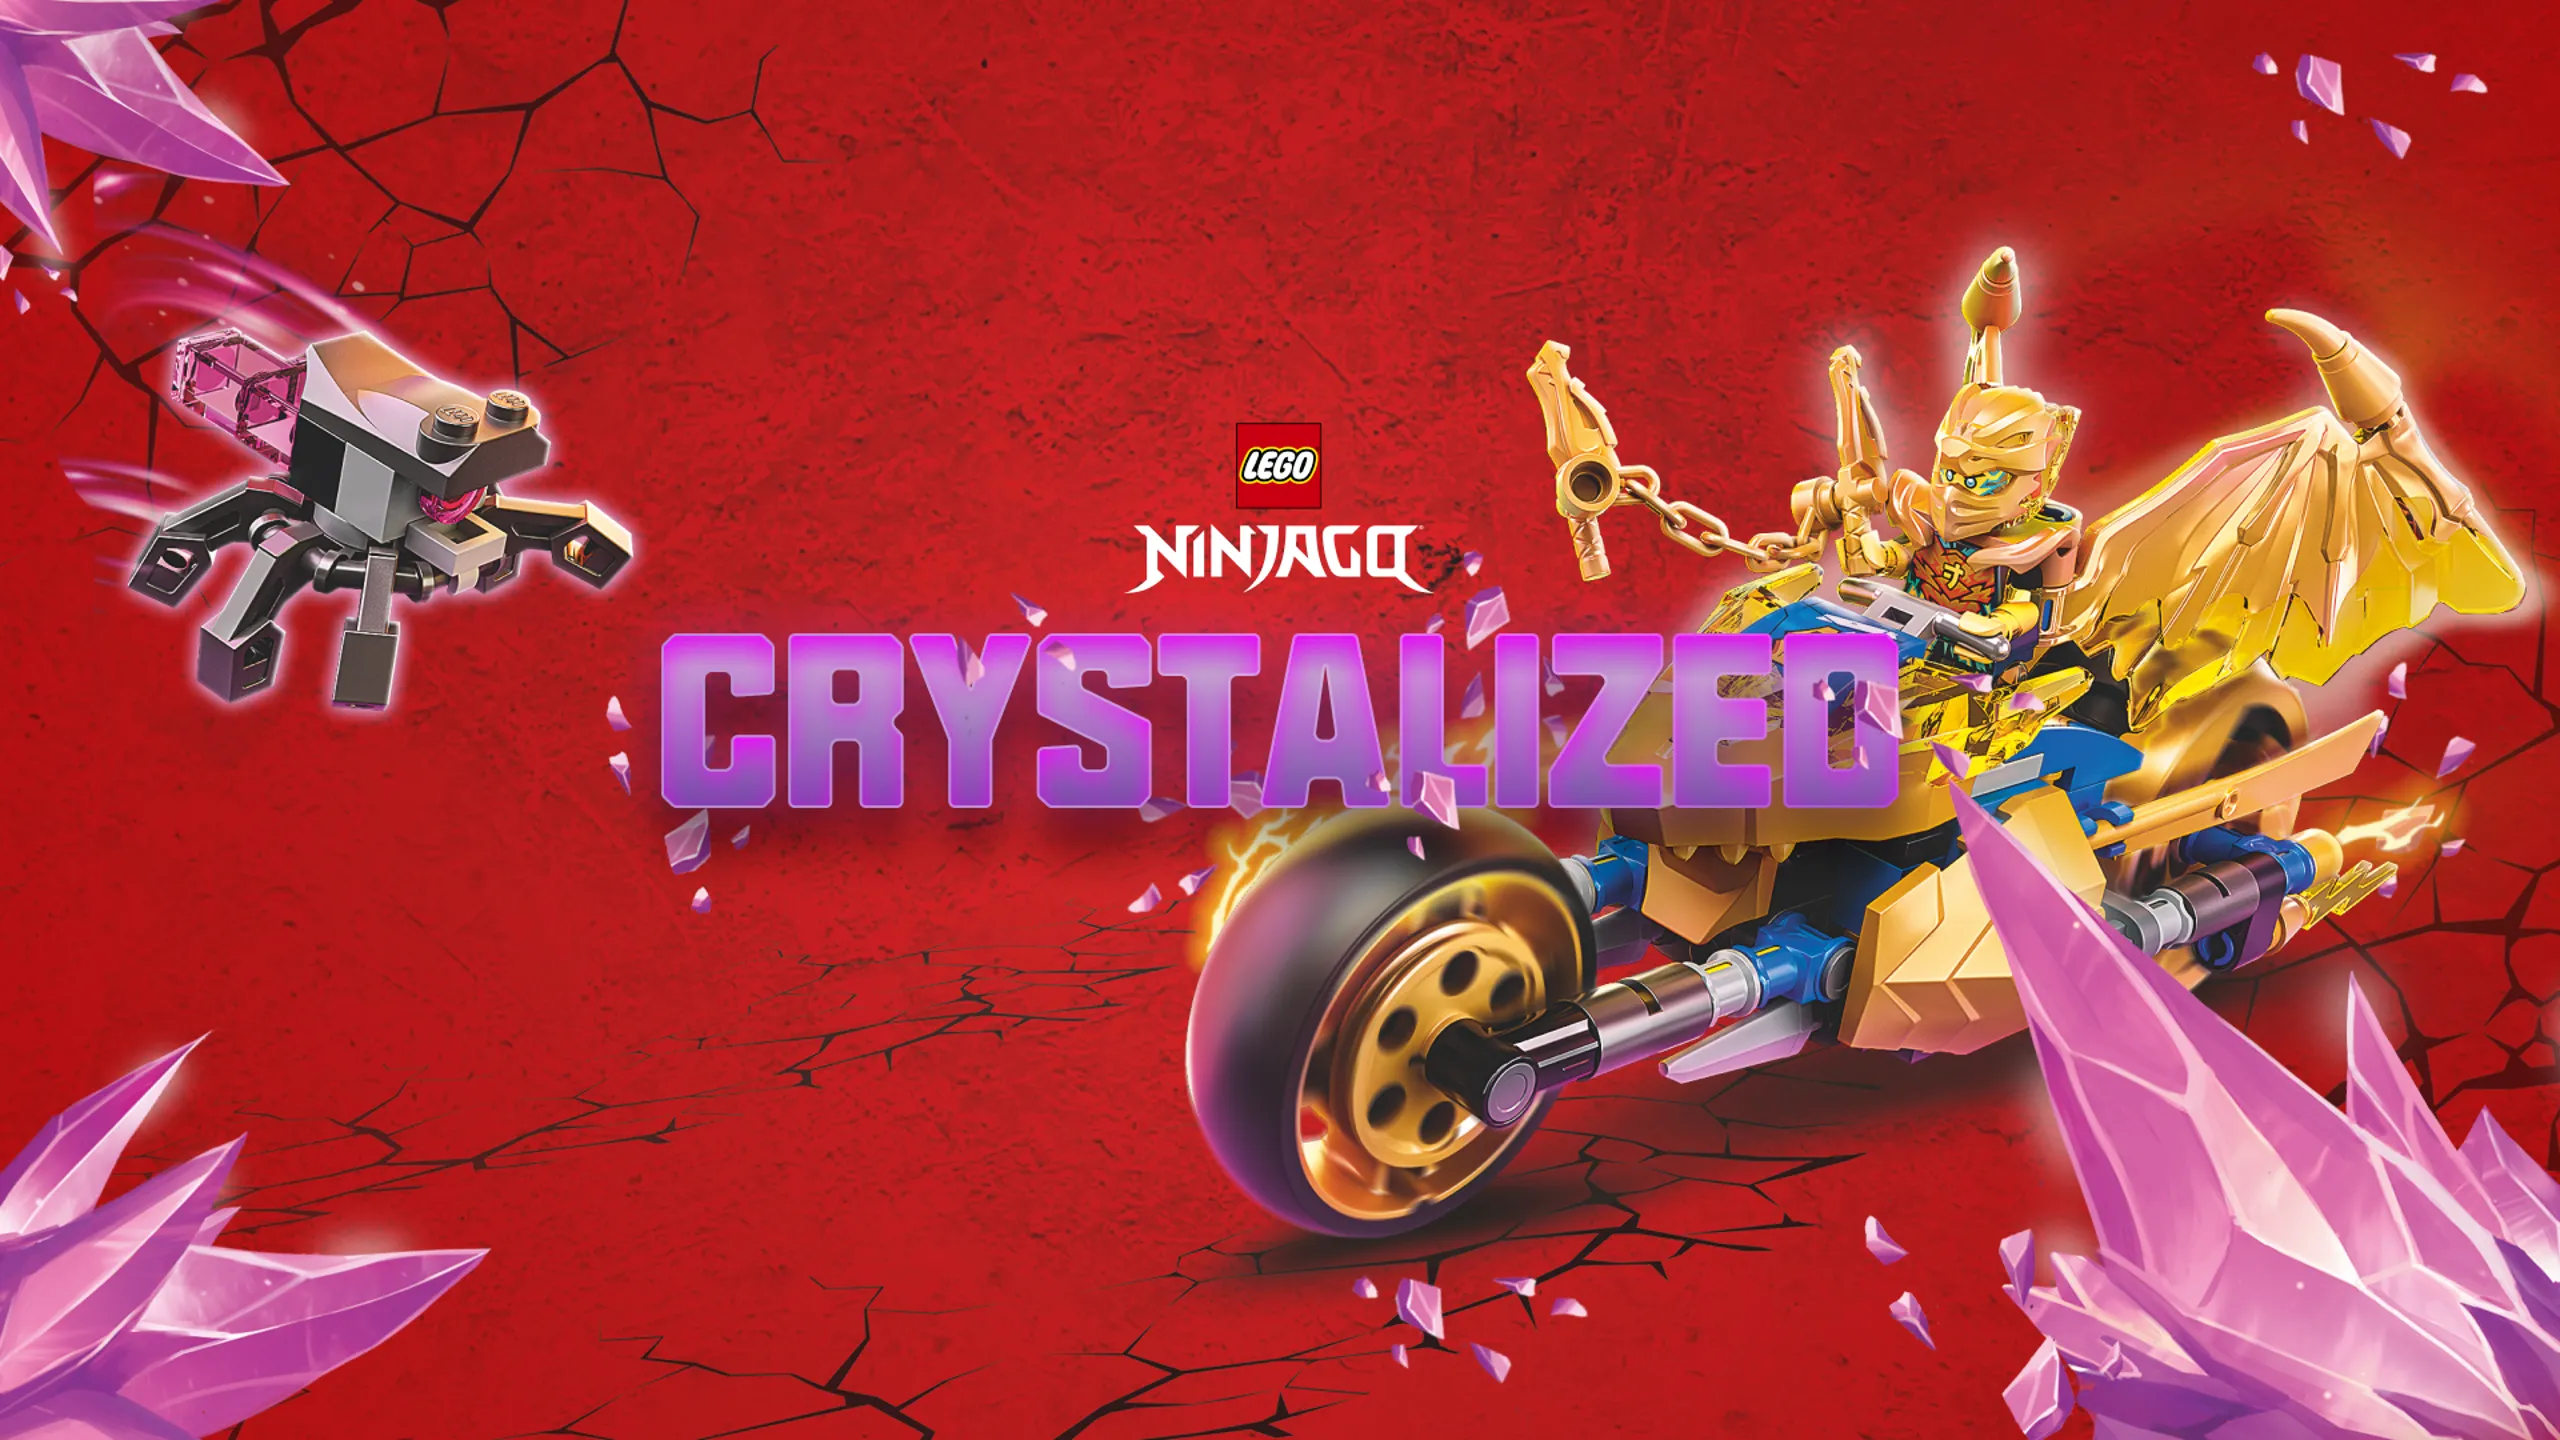 Joue au NOUVEAU jeu Crystalized !